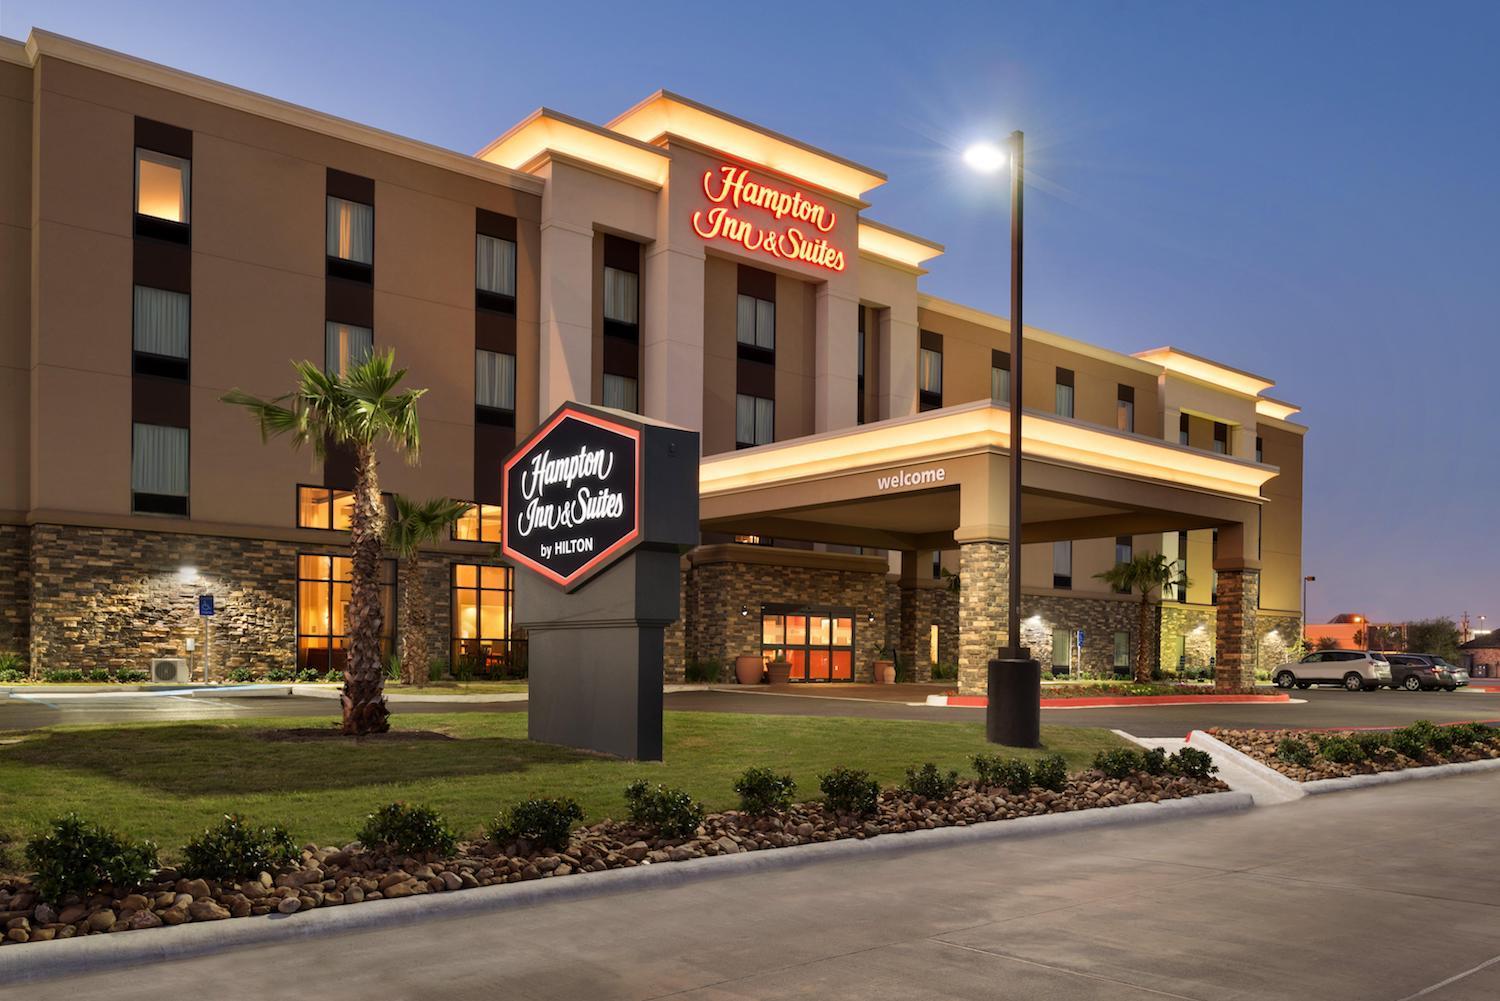 Hampton Inn & Suites Corpus Christi, Corpus Christi, TX Jobs